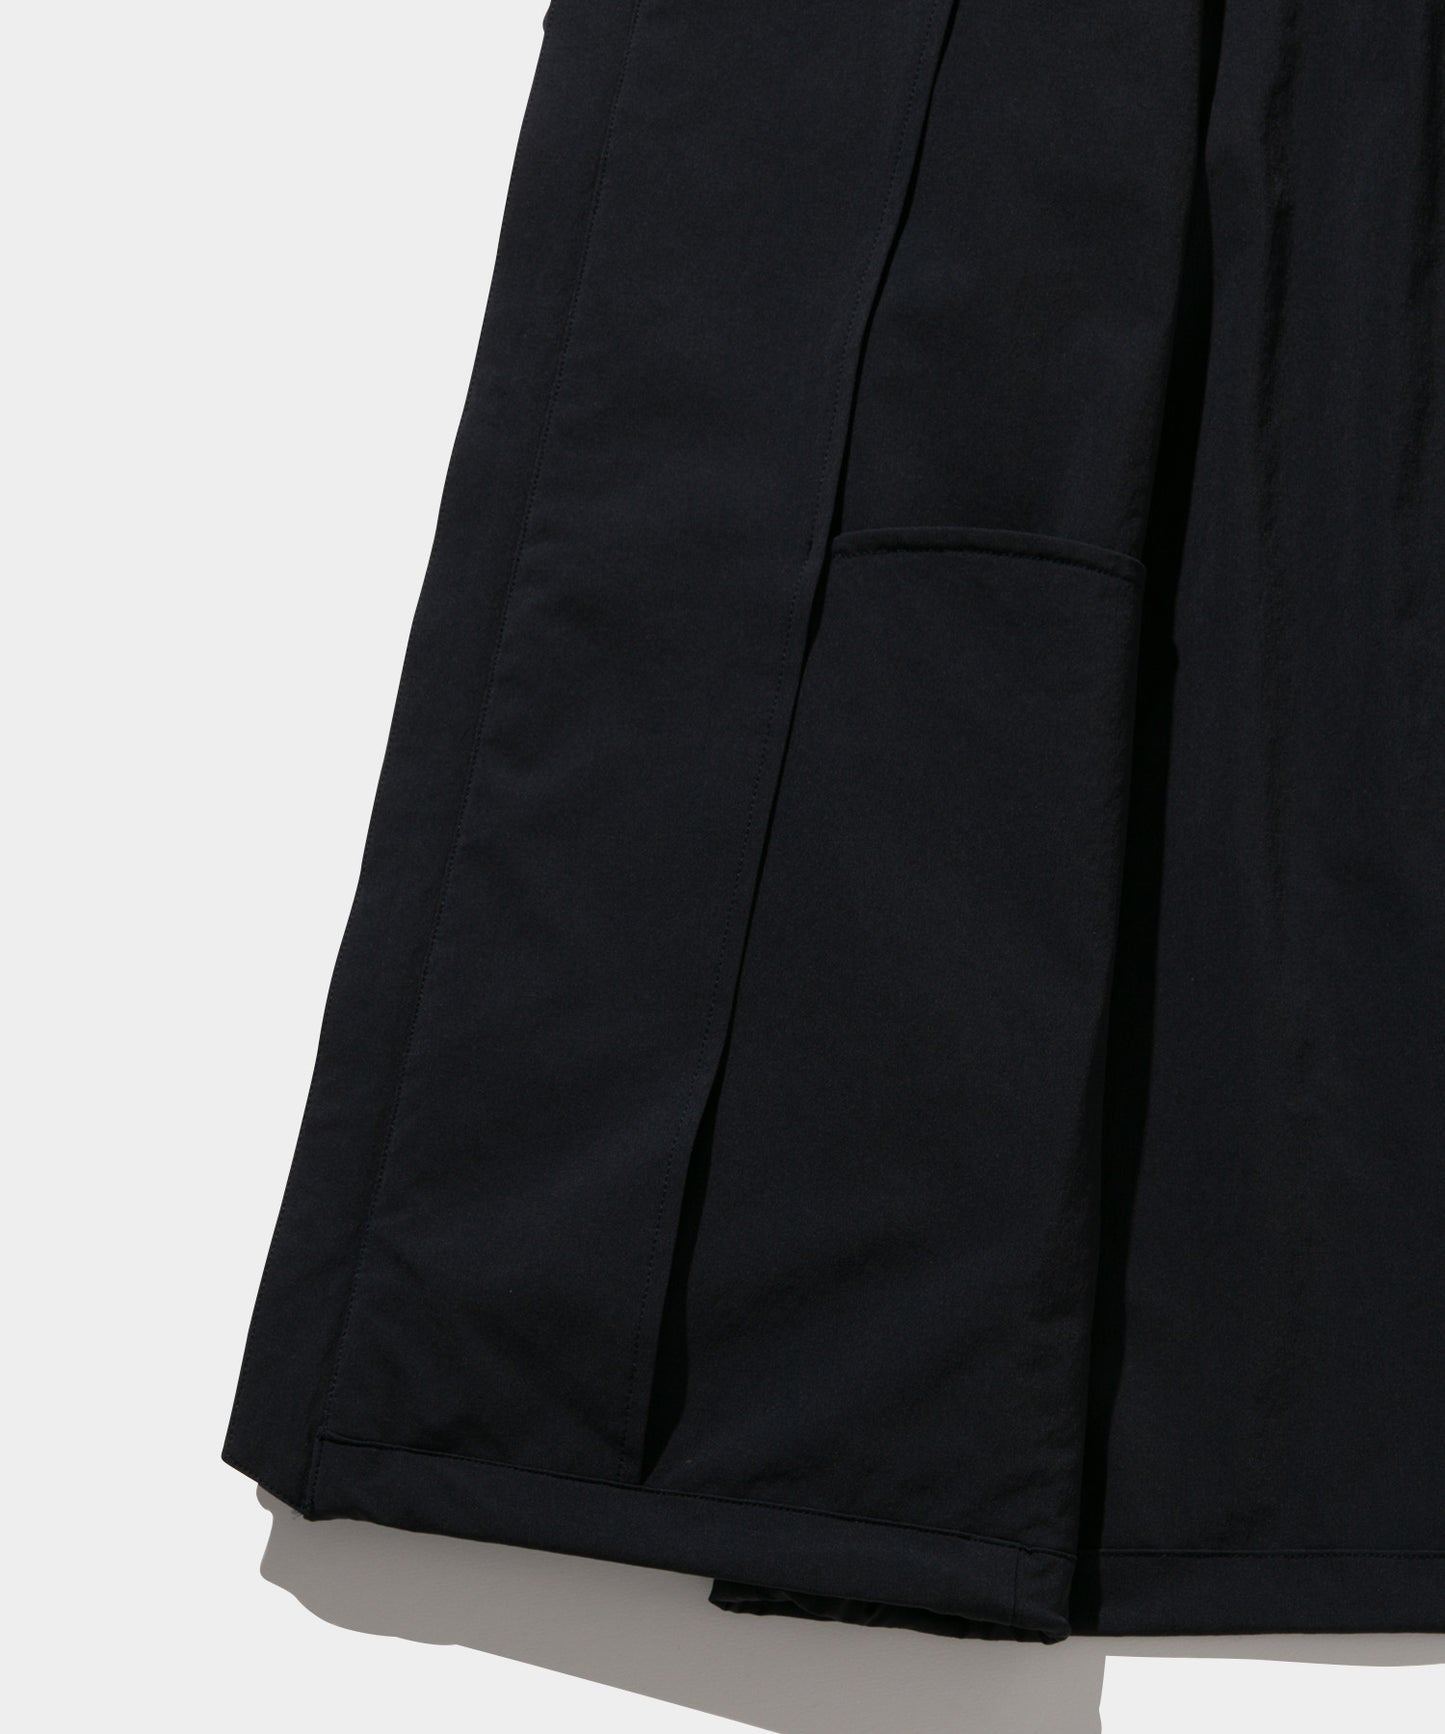 Woven Zip Hooded Jacket BLACK